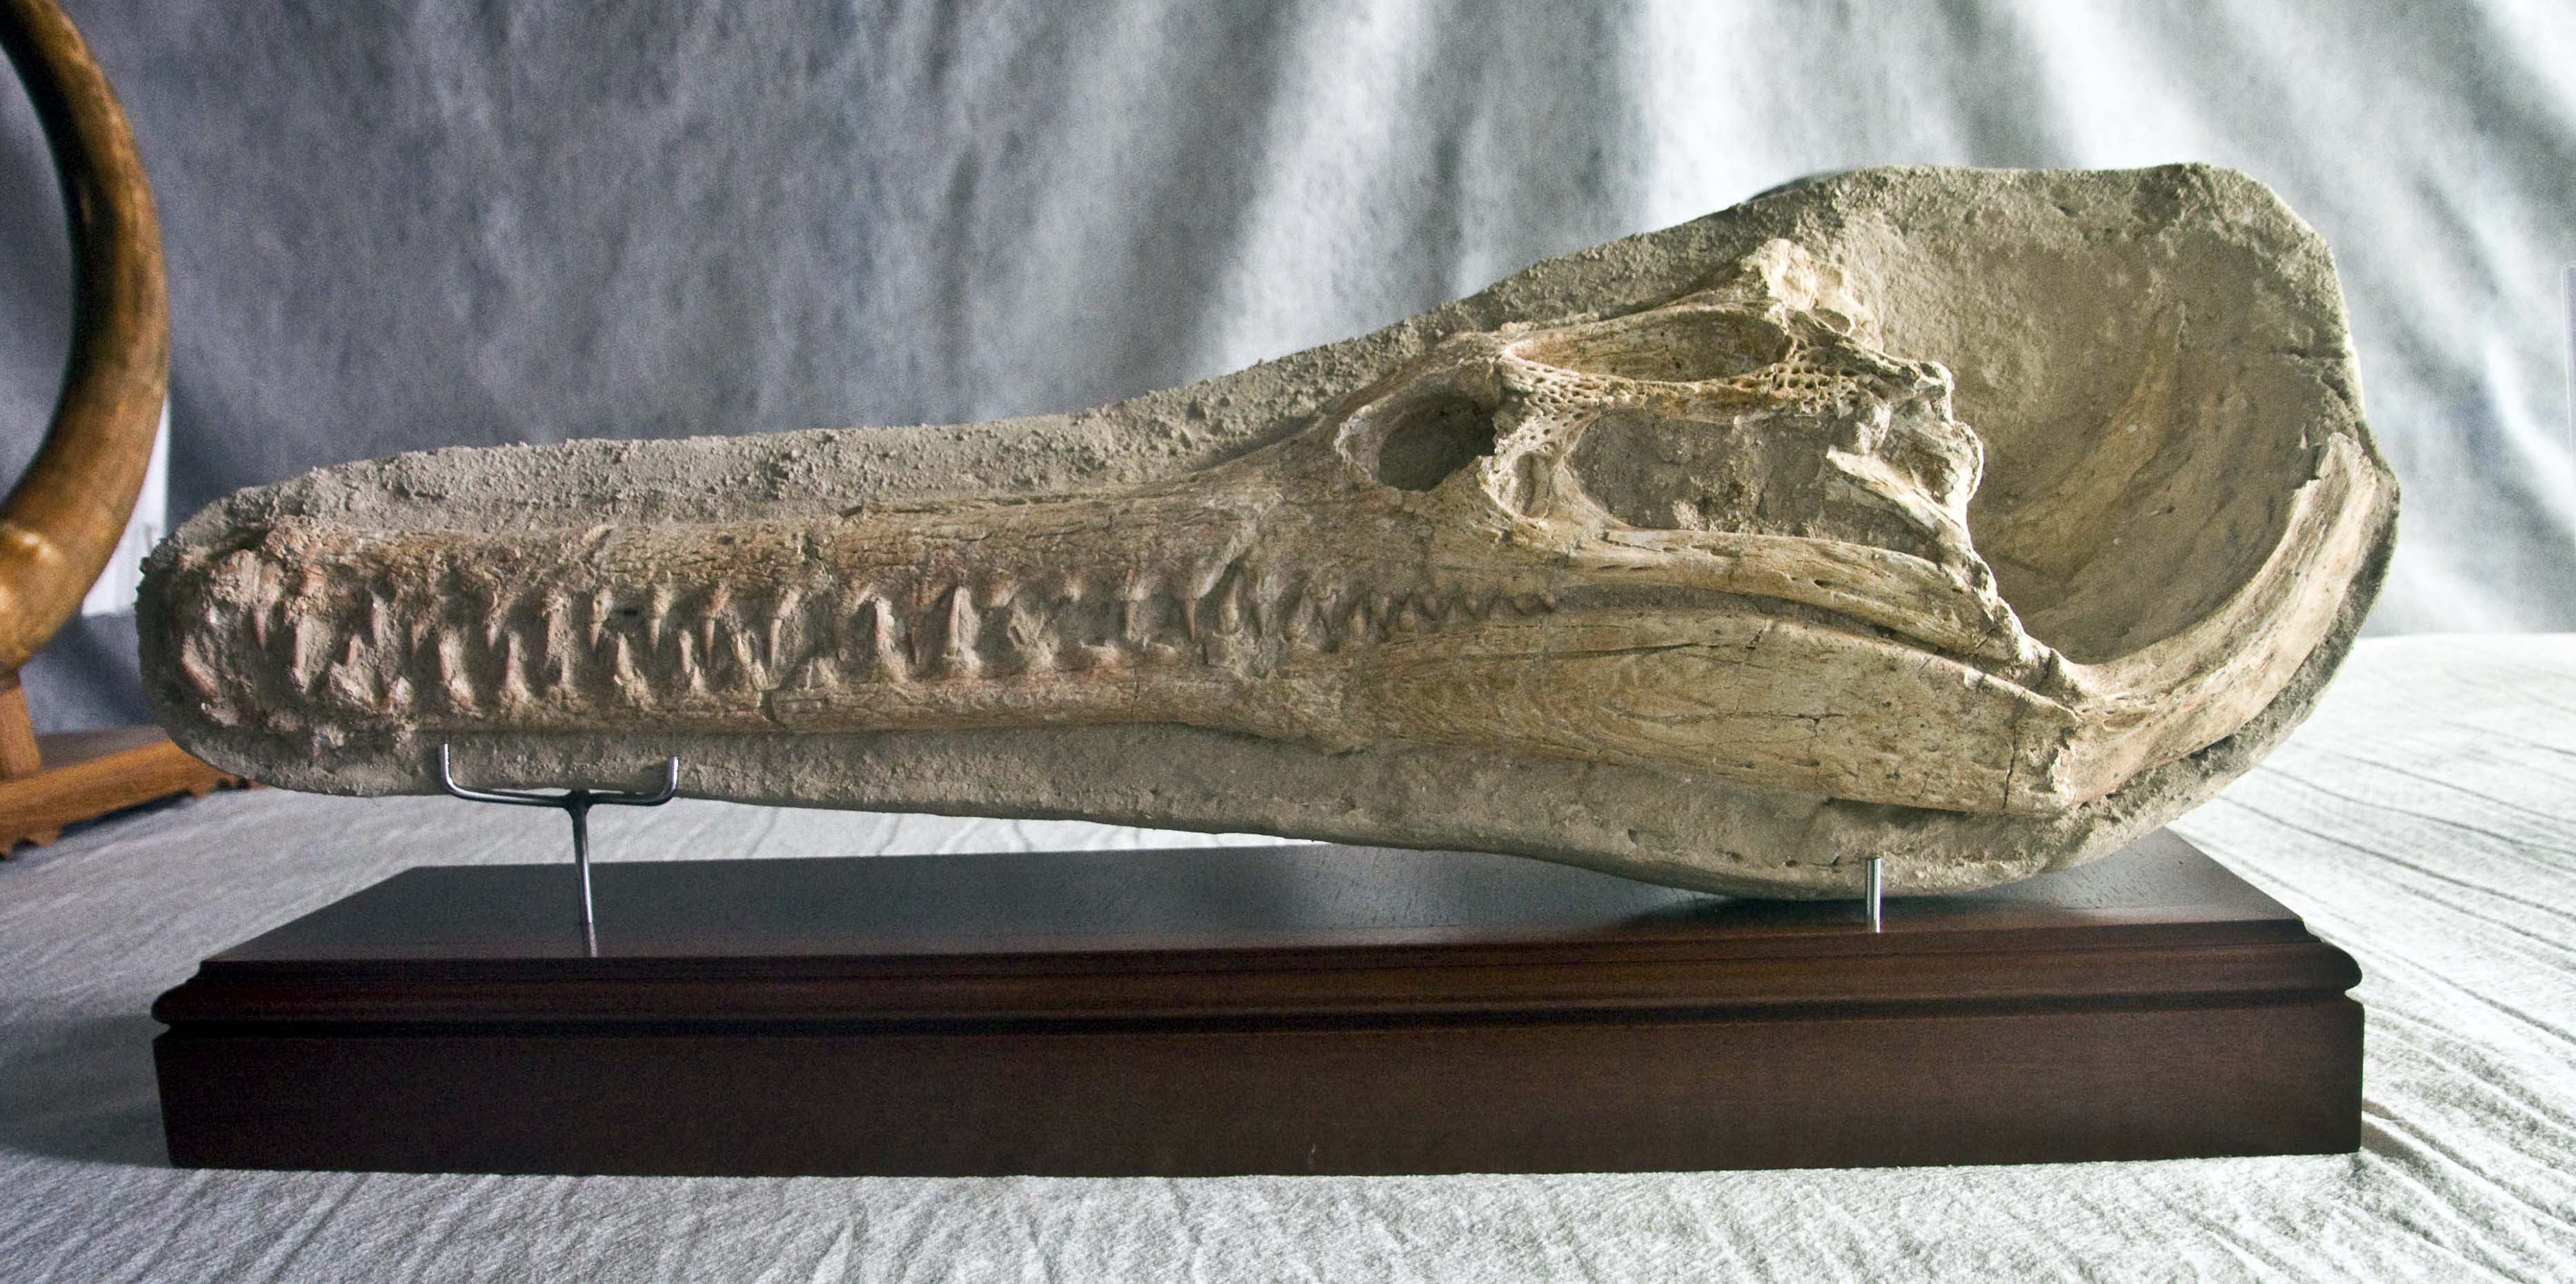 tsiridion-dyrosaurus phosphaticus 65-146 mln yrs morocco